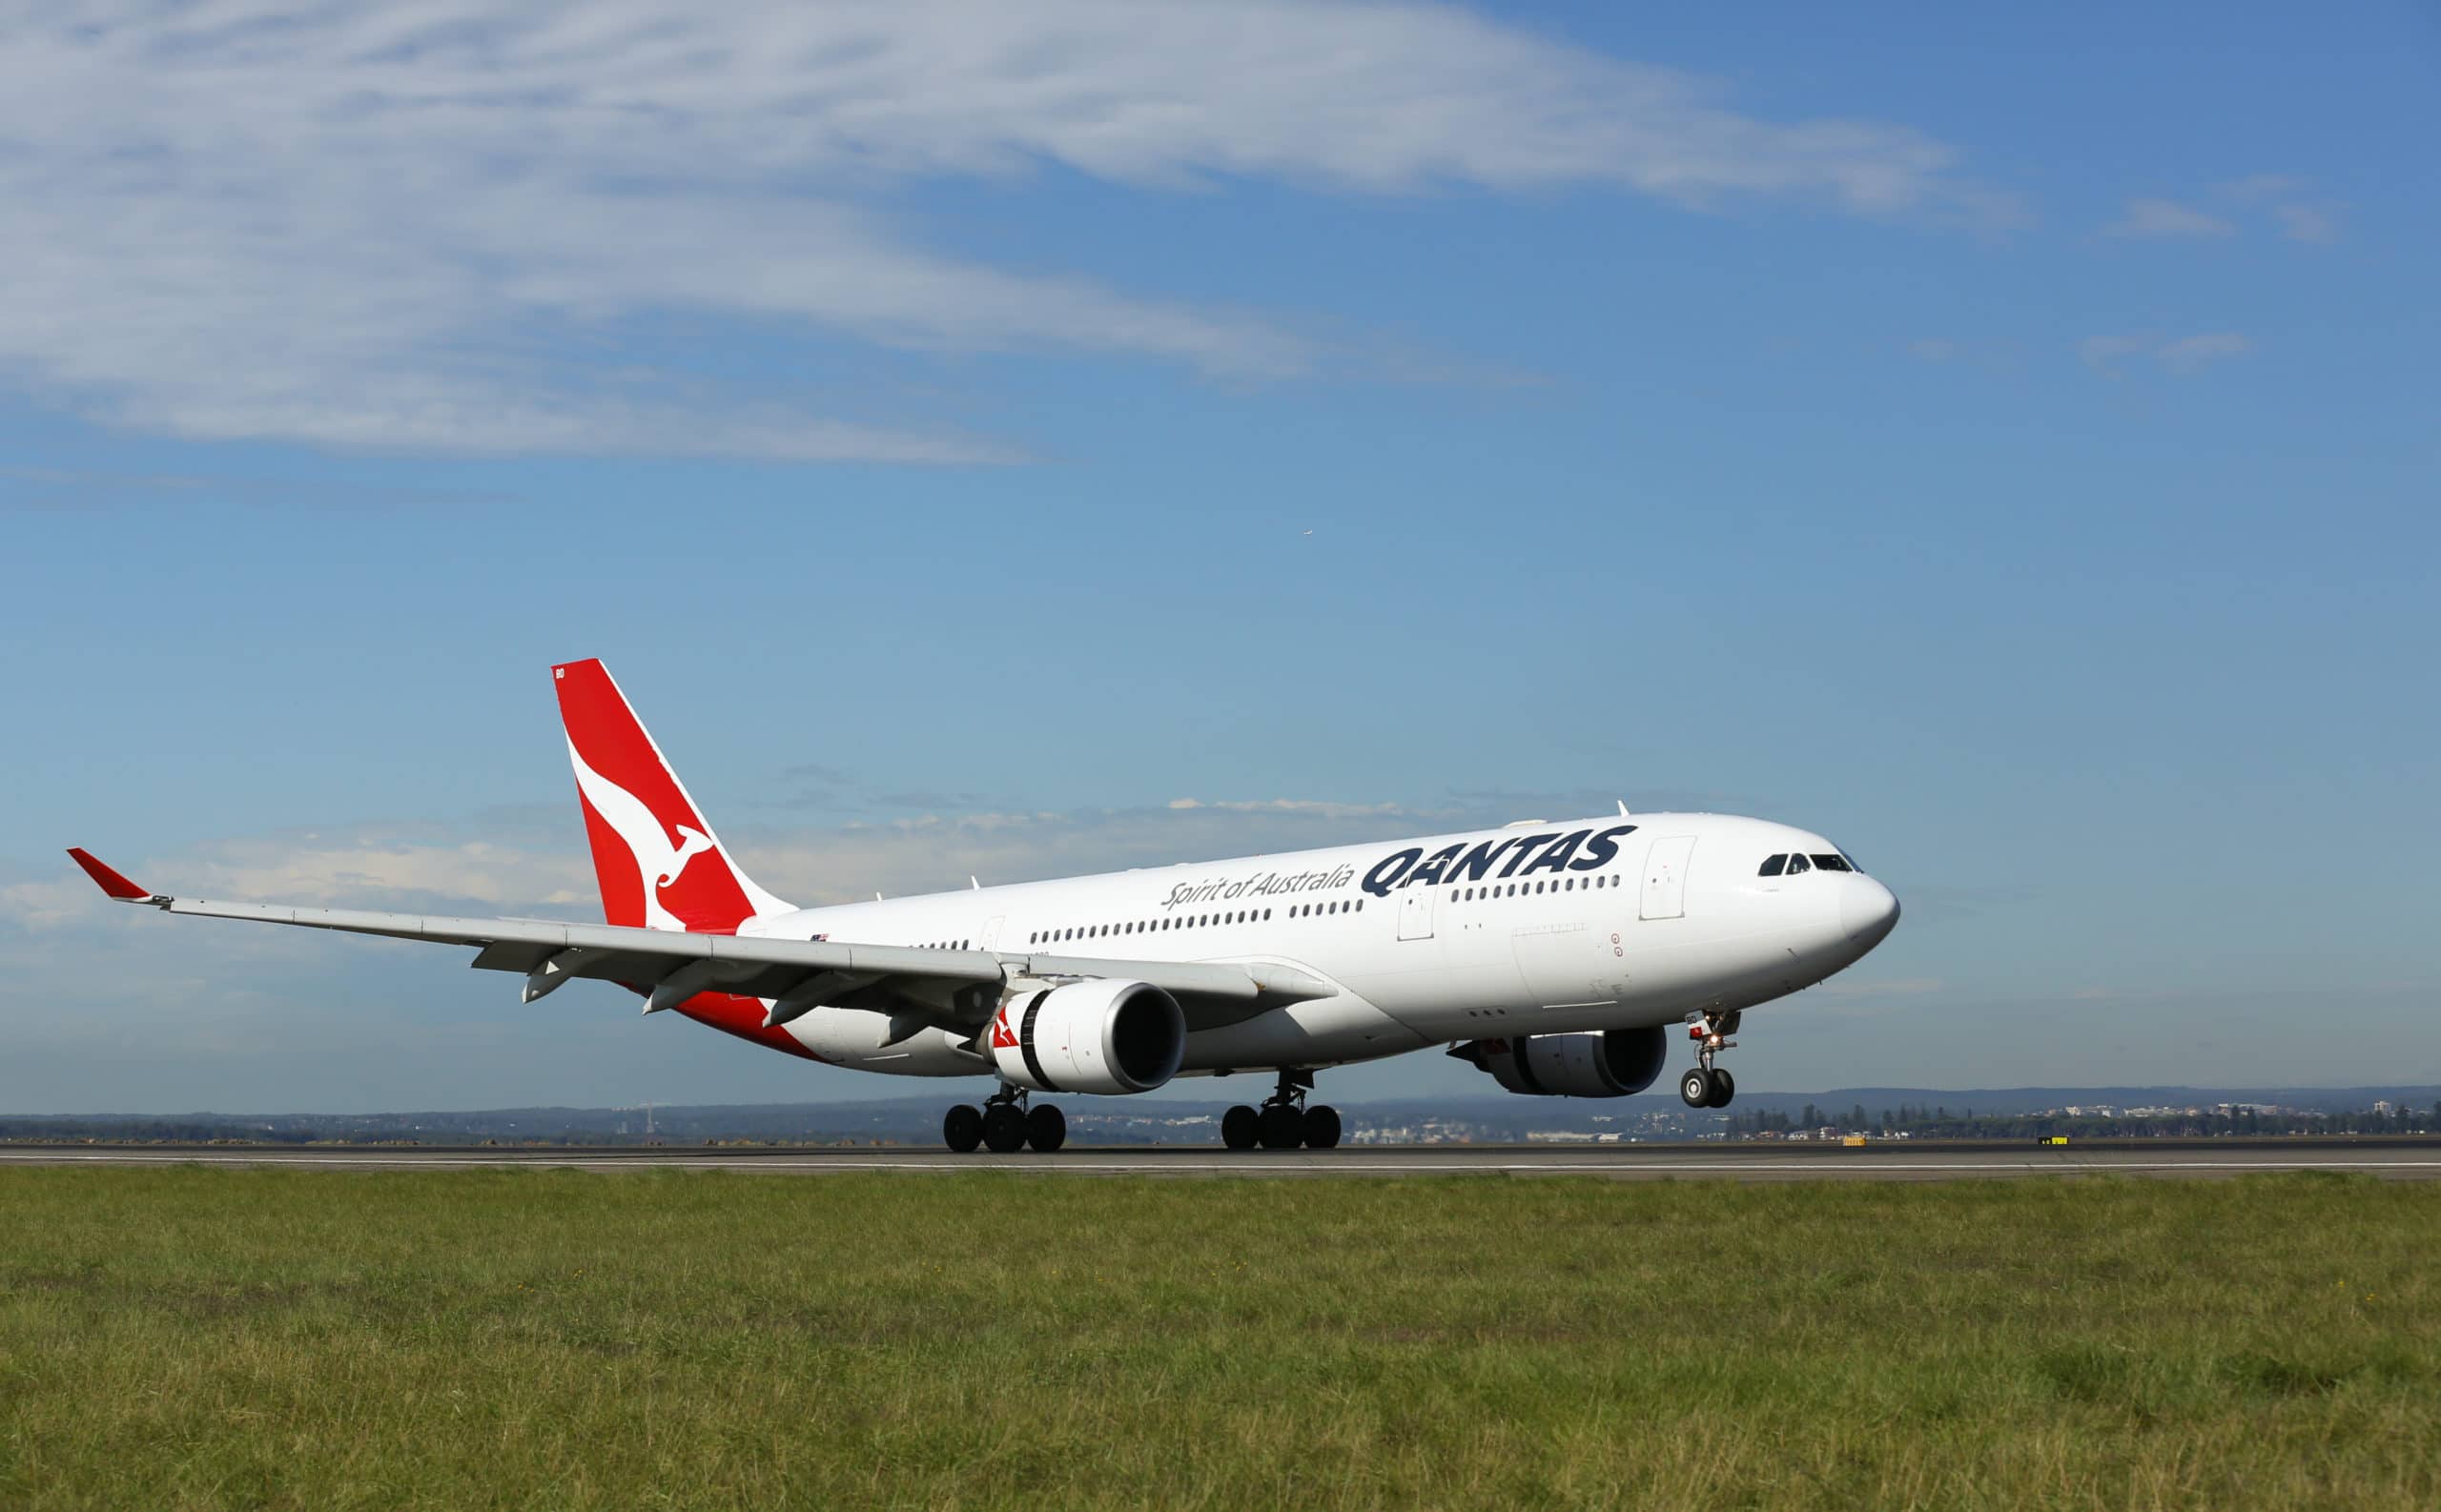 Qantas A330-200